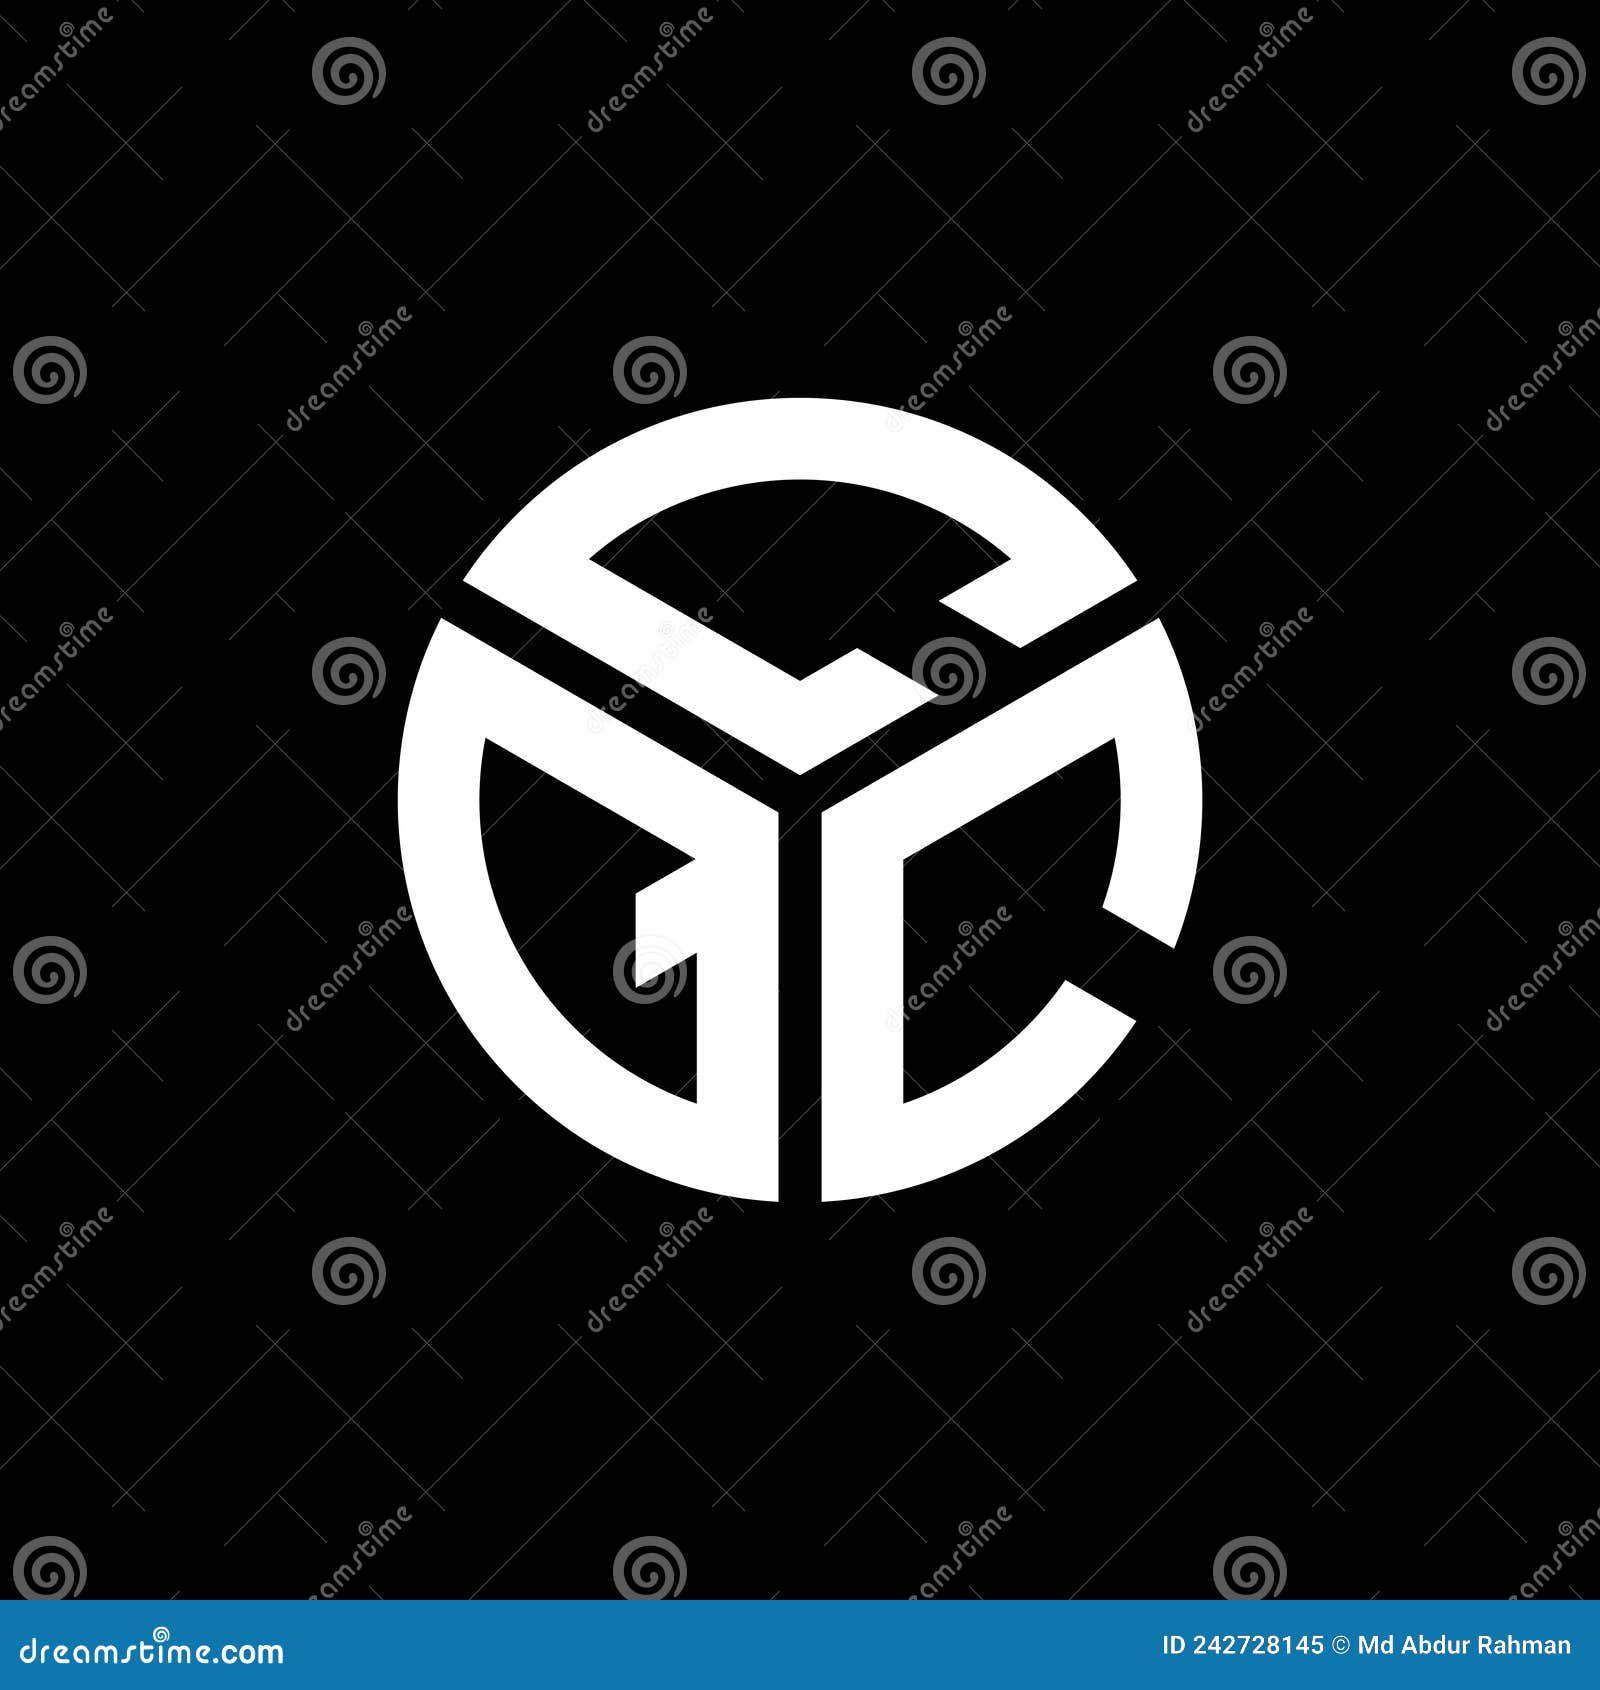 cqc letter logo  on black background. cqc creative initials letter logo concept. cqc letter 